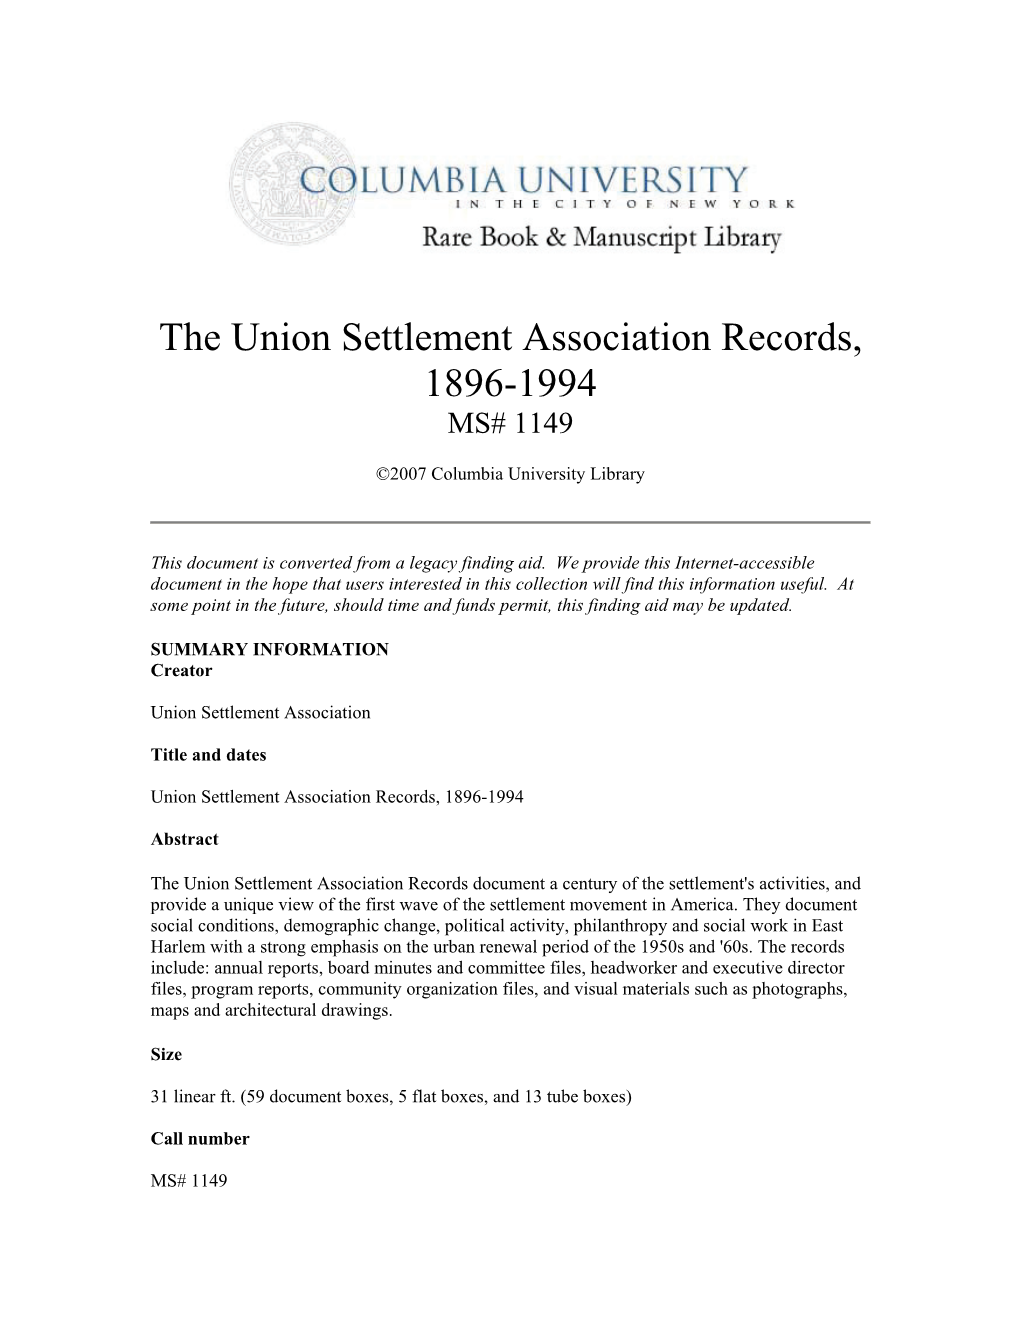 The Union Settlement Association Records, 1896-1994 MS# 1149